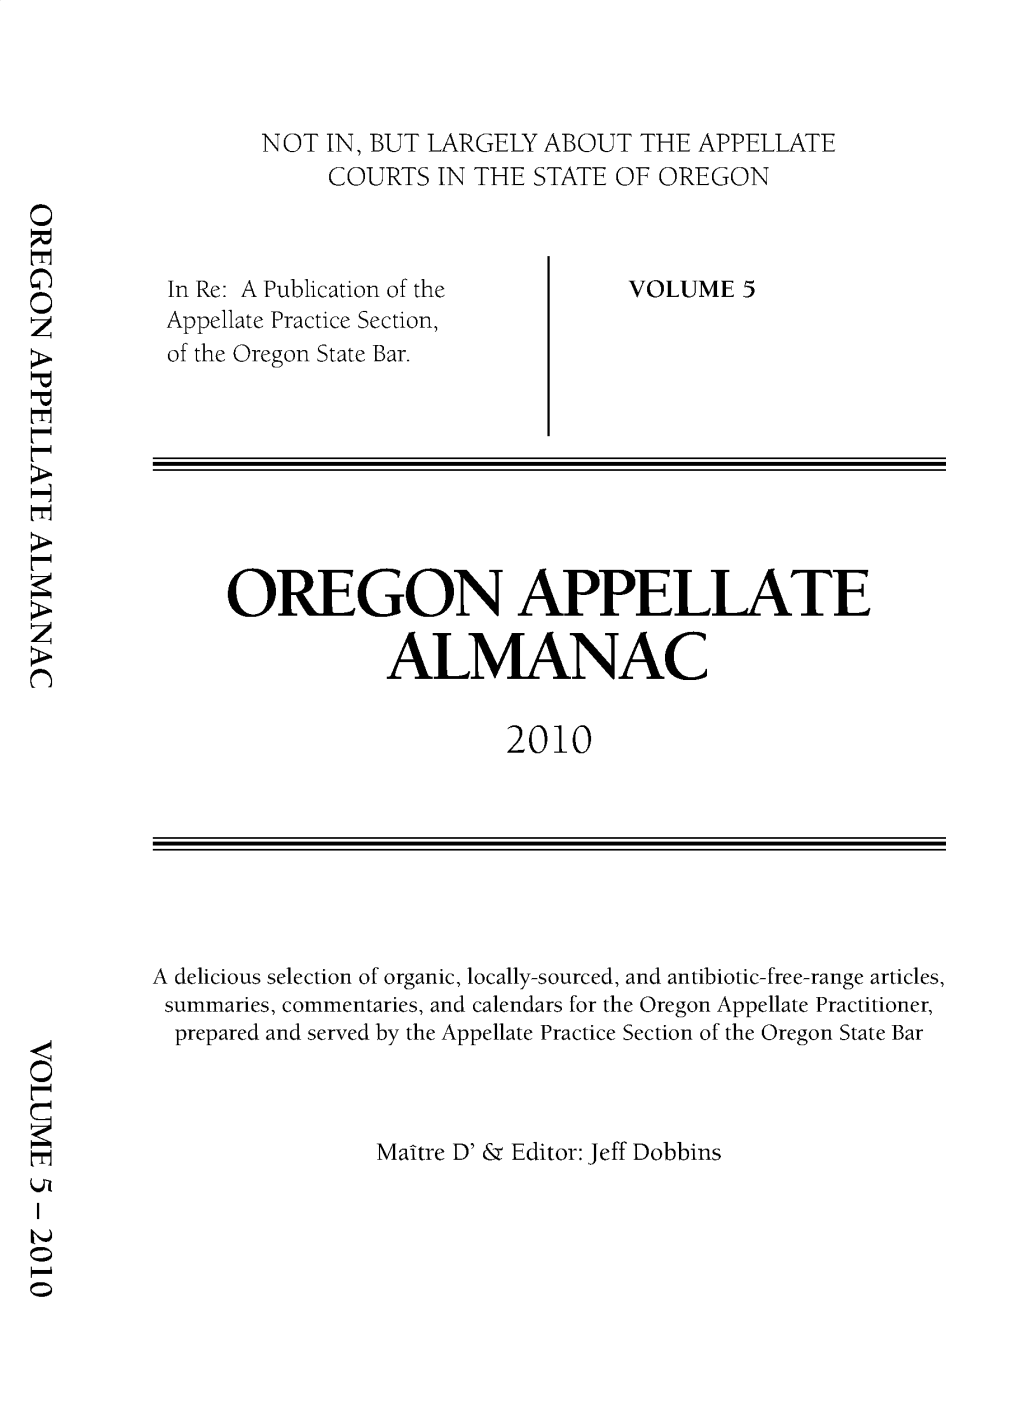 Oregon Appellate Almanac 2010